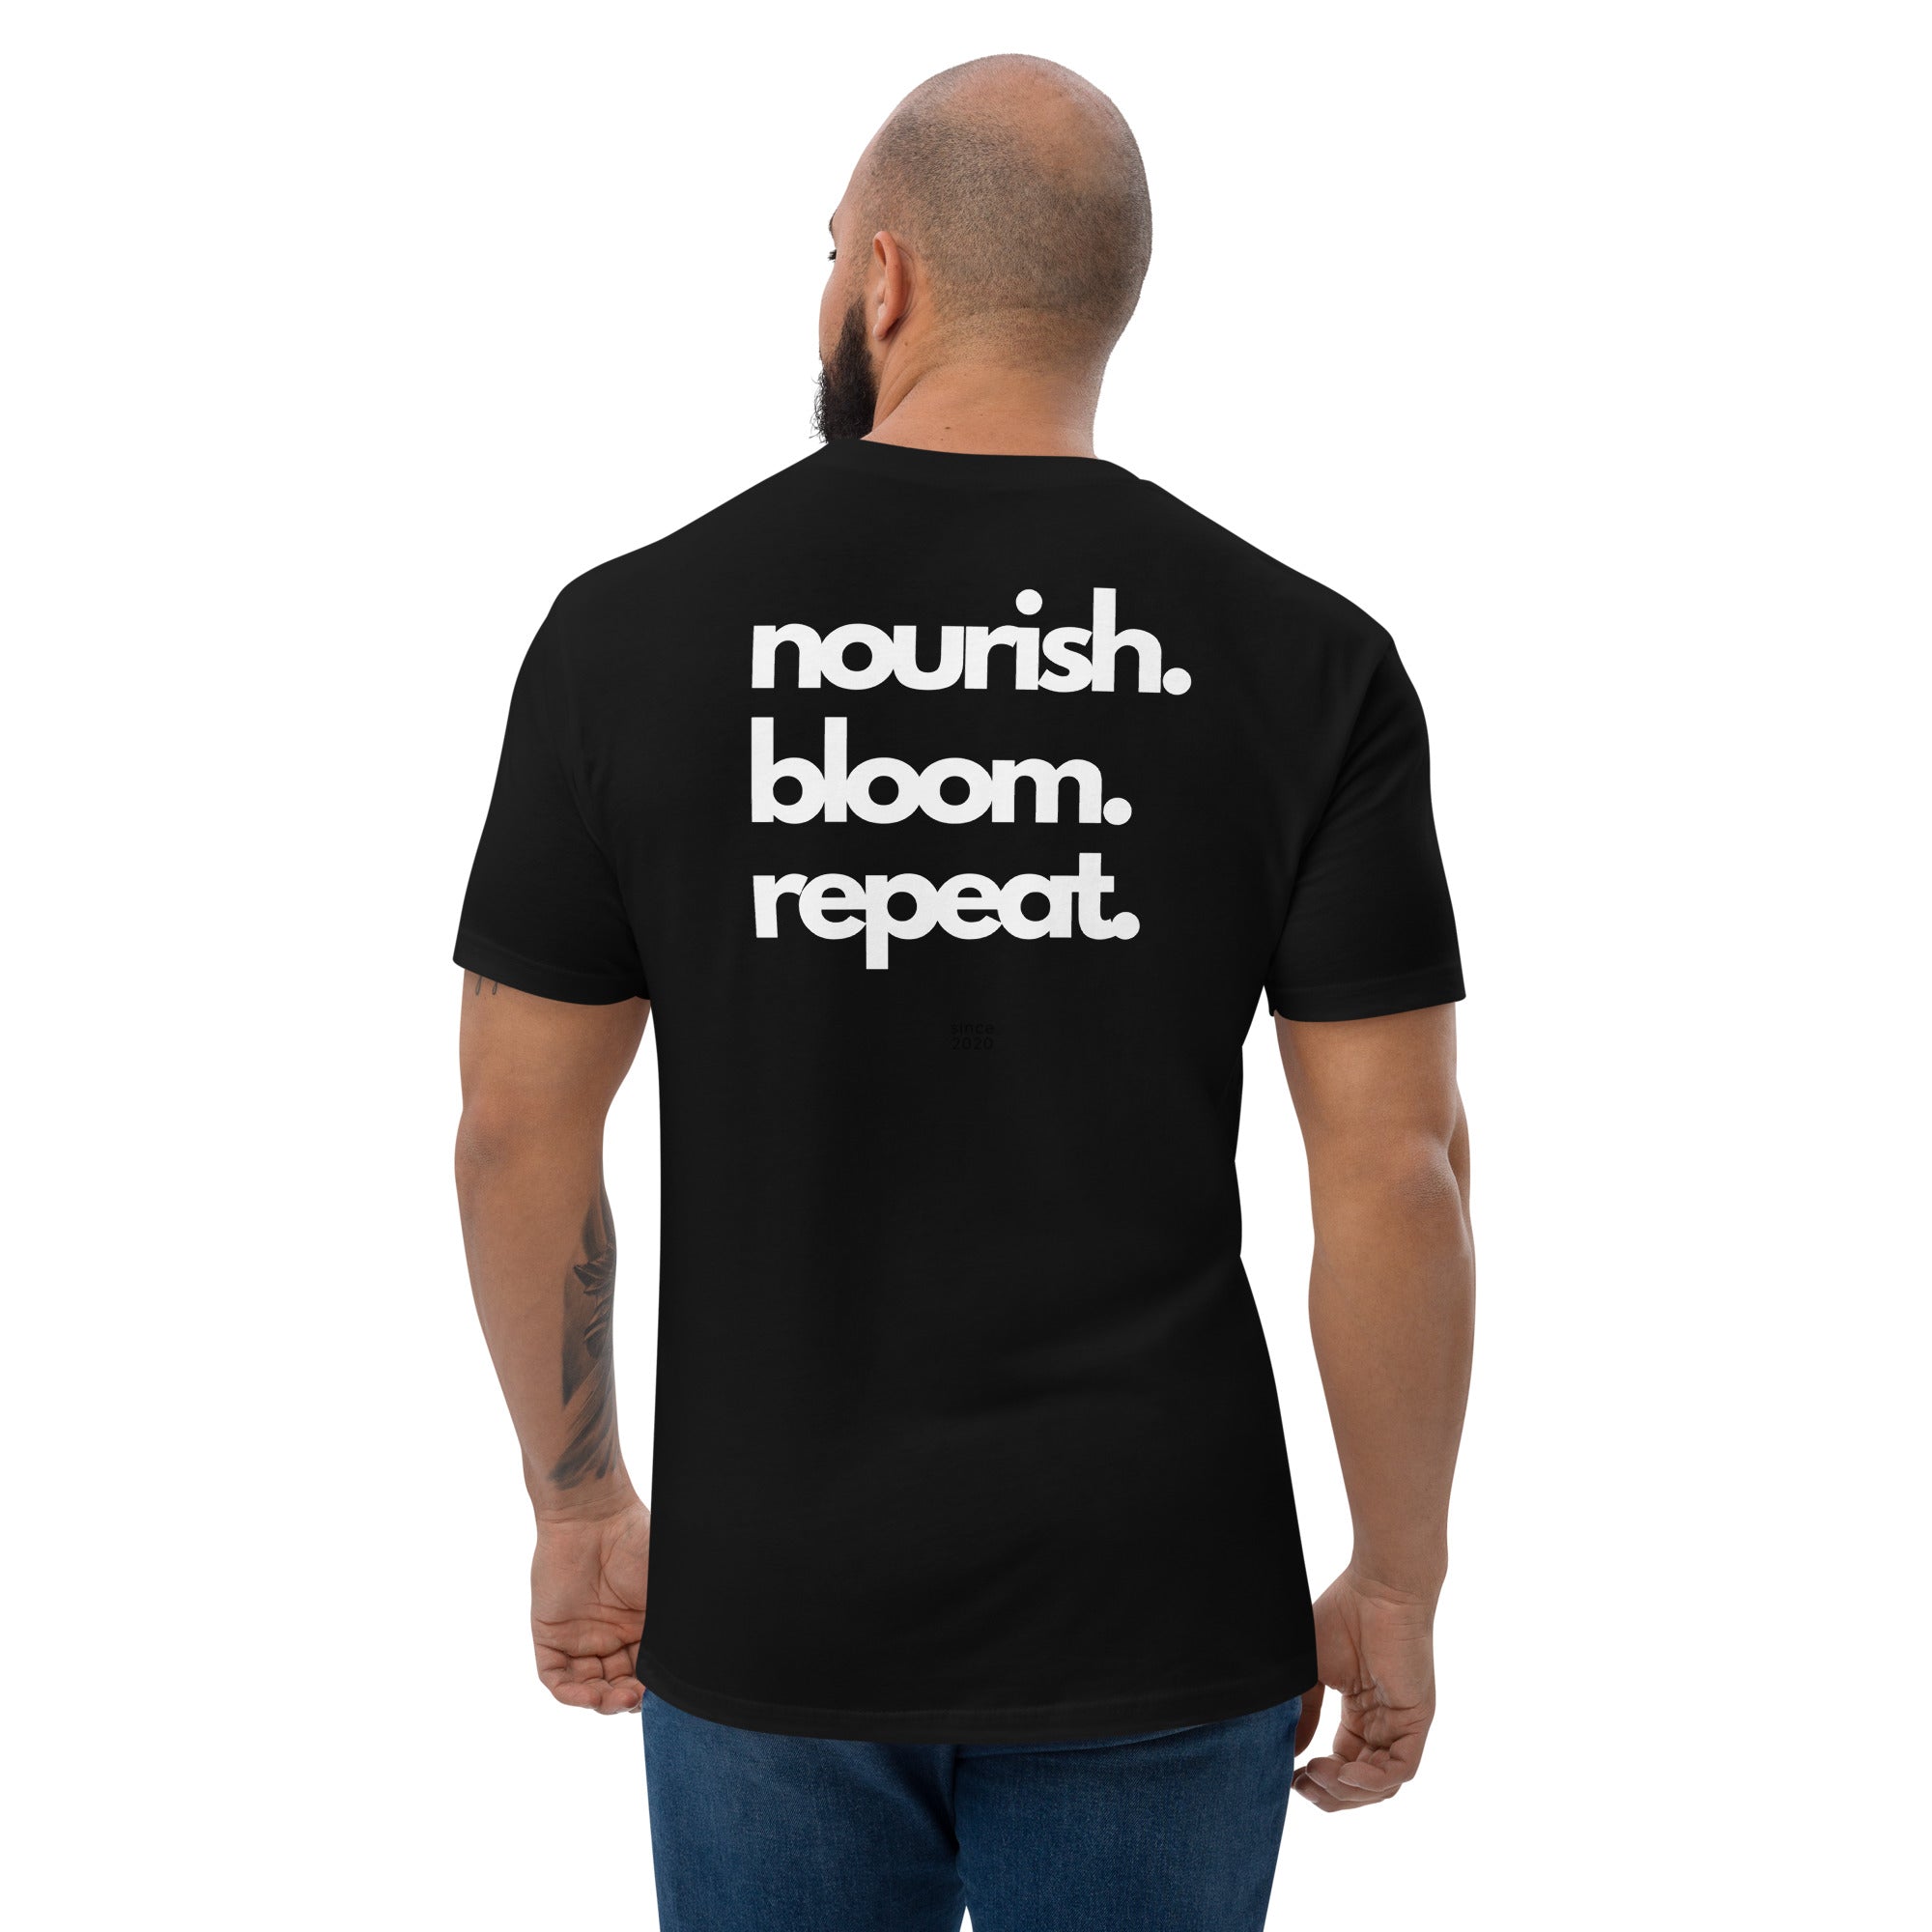 Nourish. Bloom. Repeat. Short Sleeve T-shirt